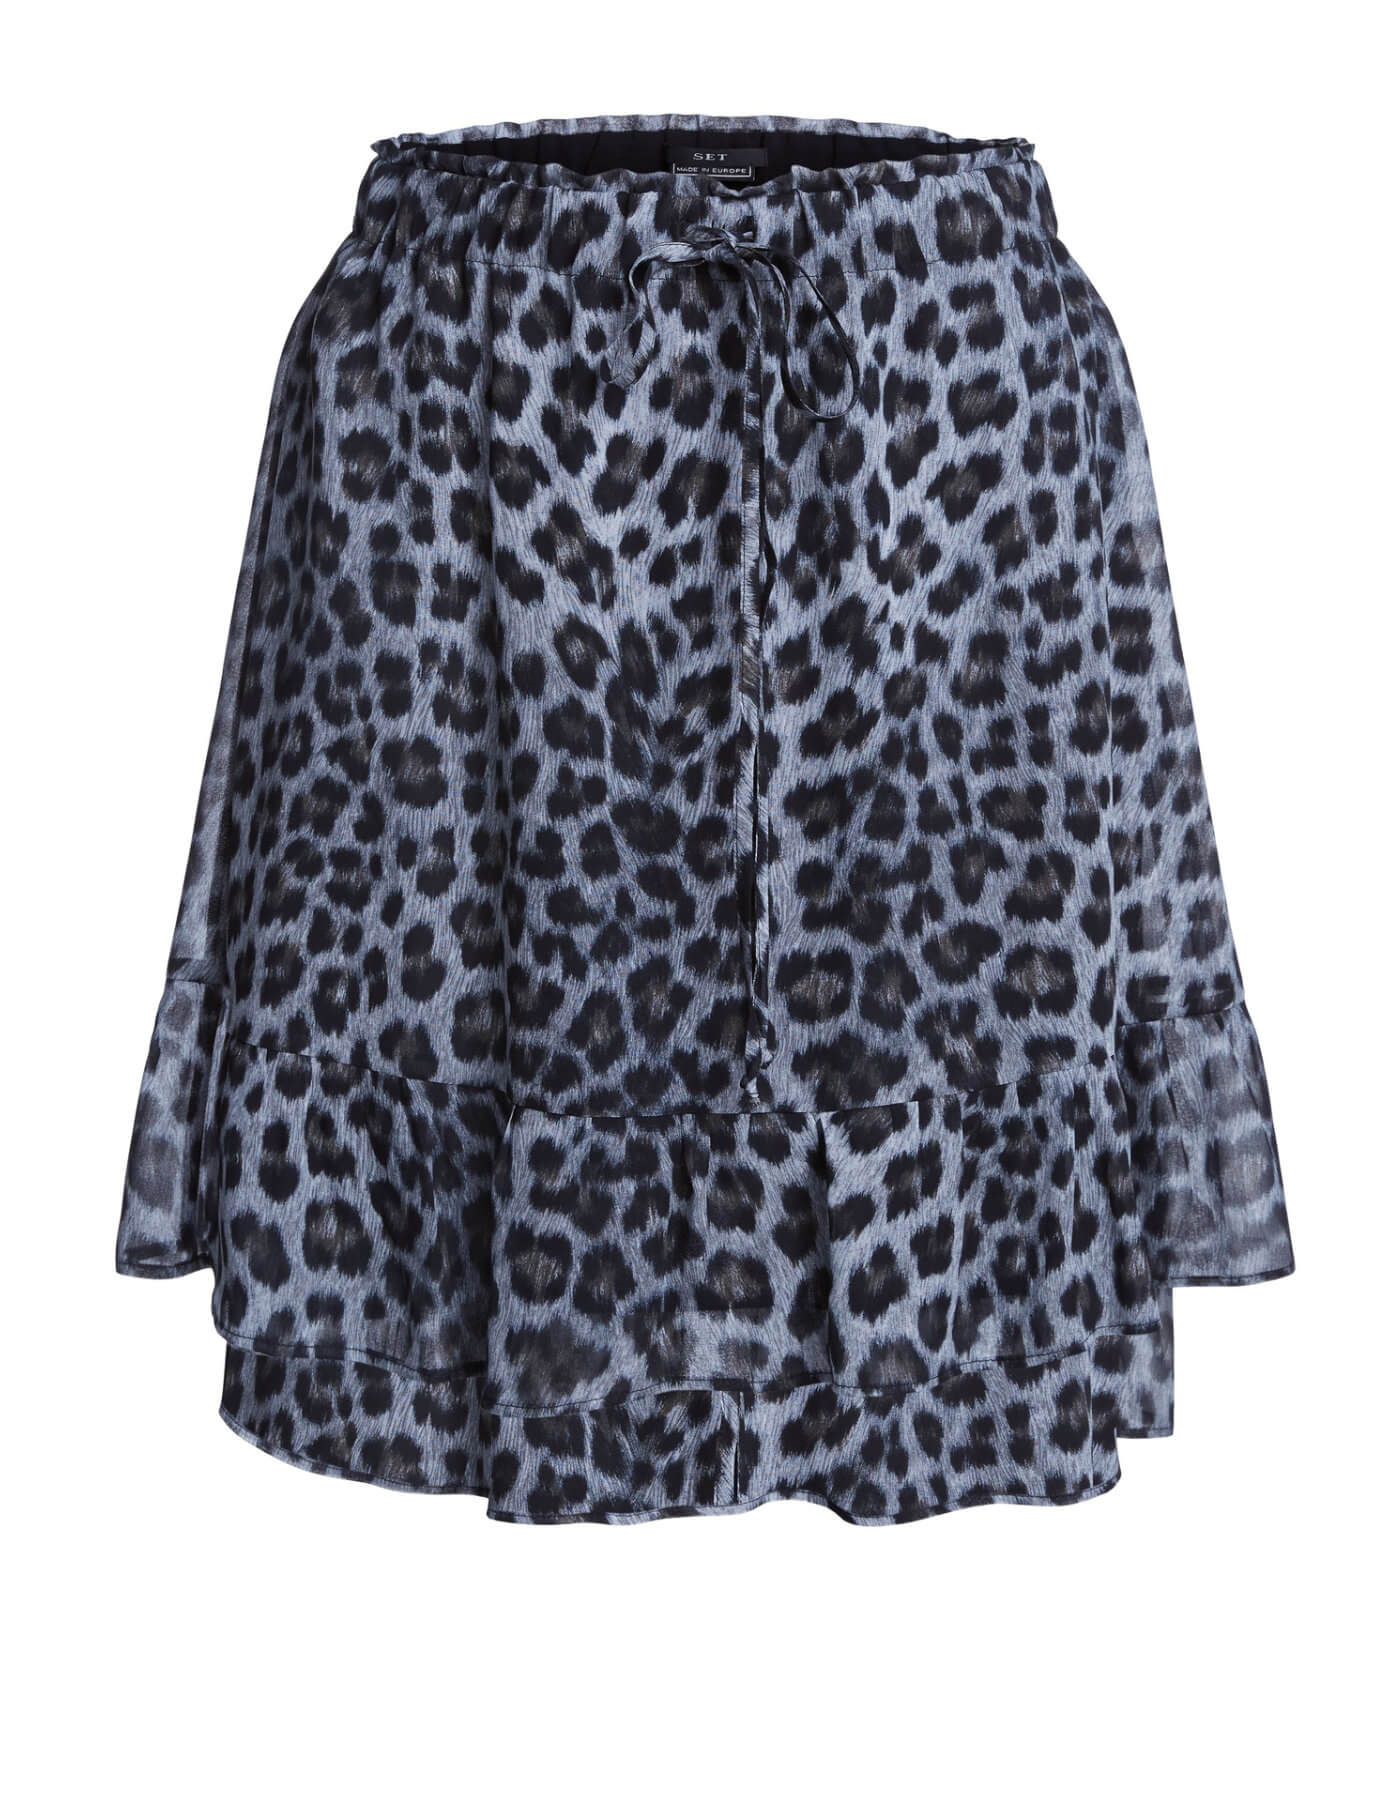 Set Leopard Skirt In Leopard Print at Storm Fashion